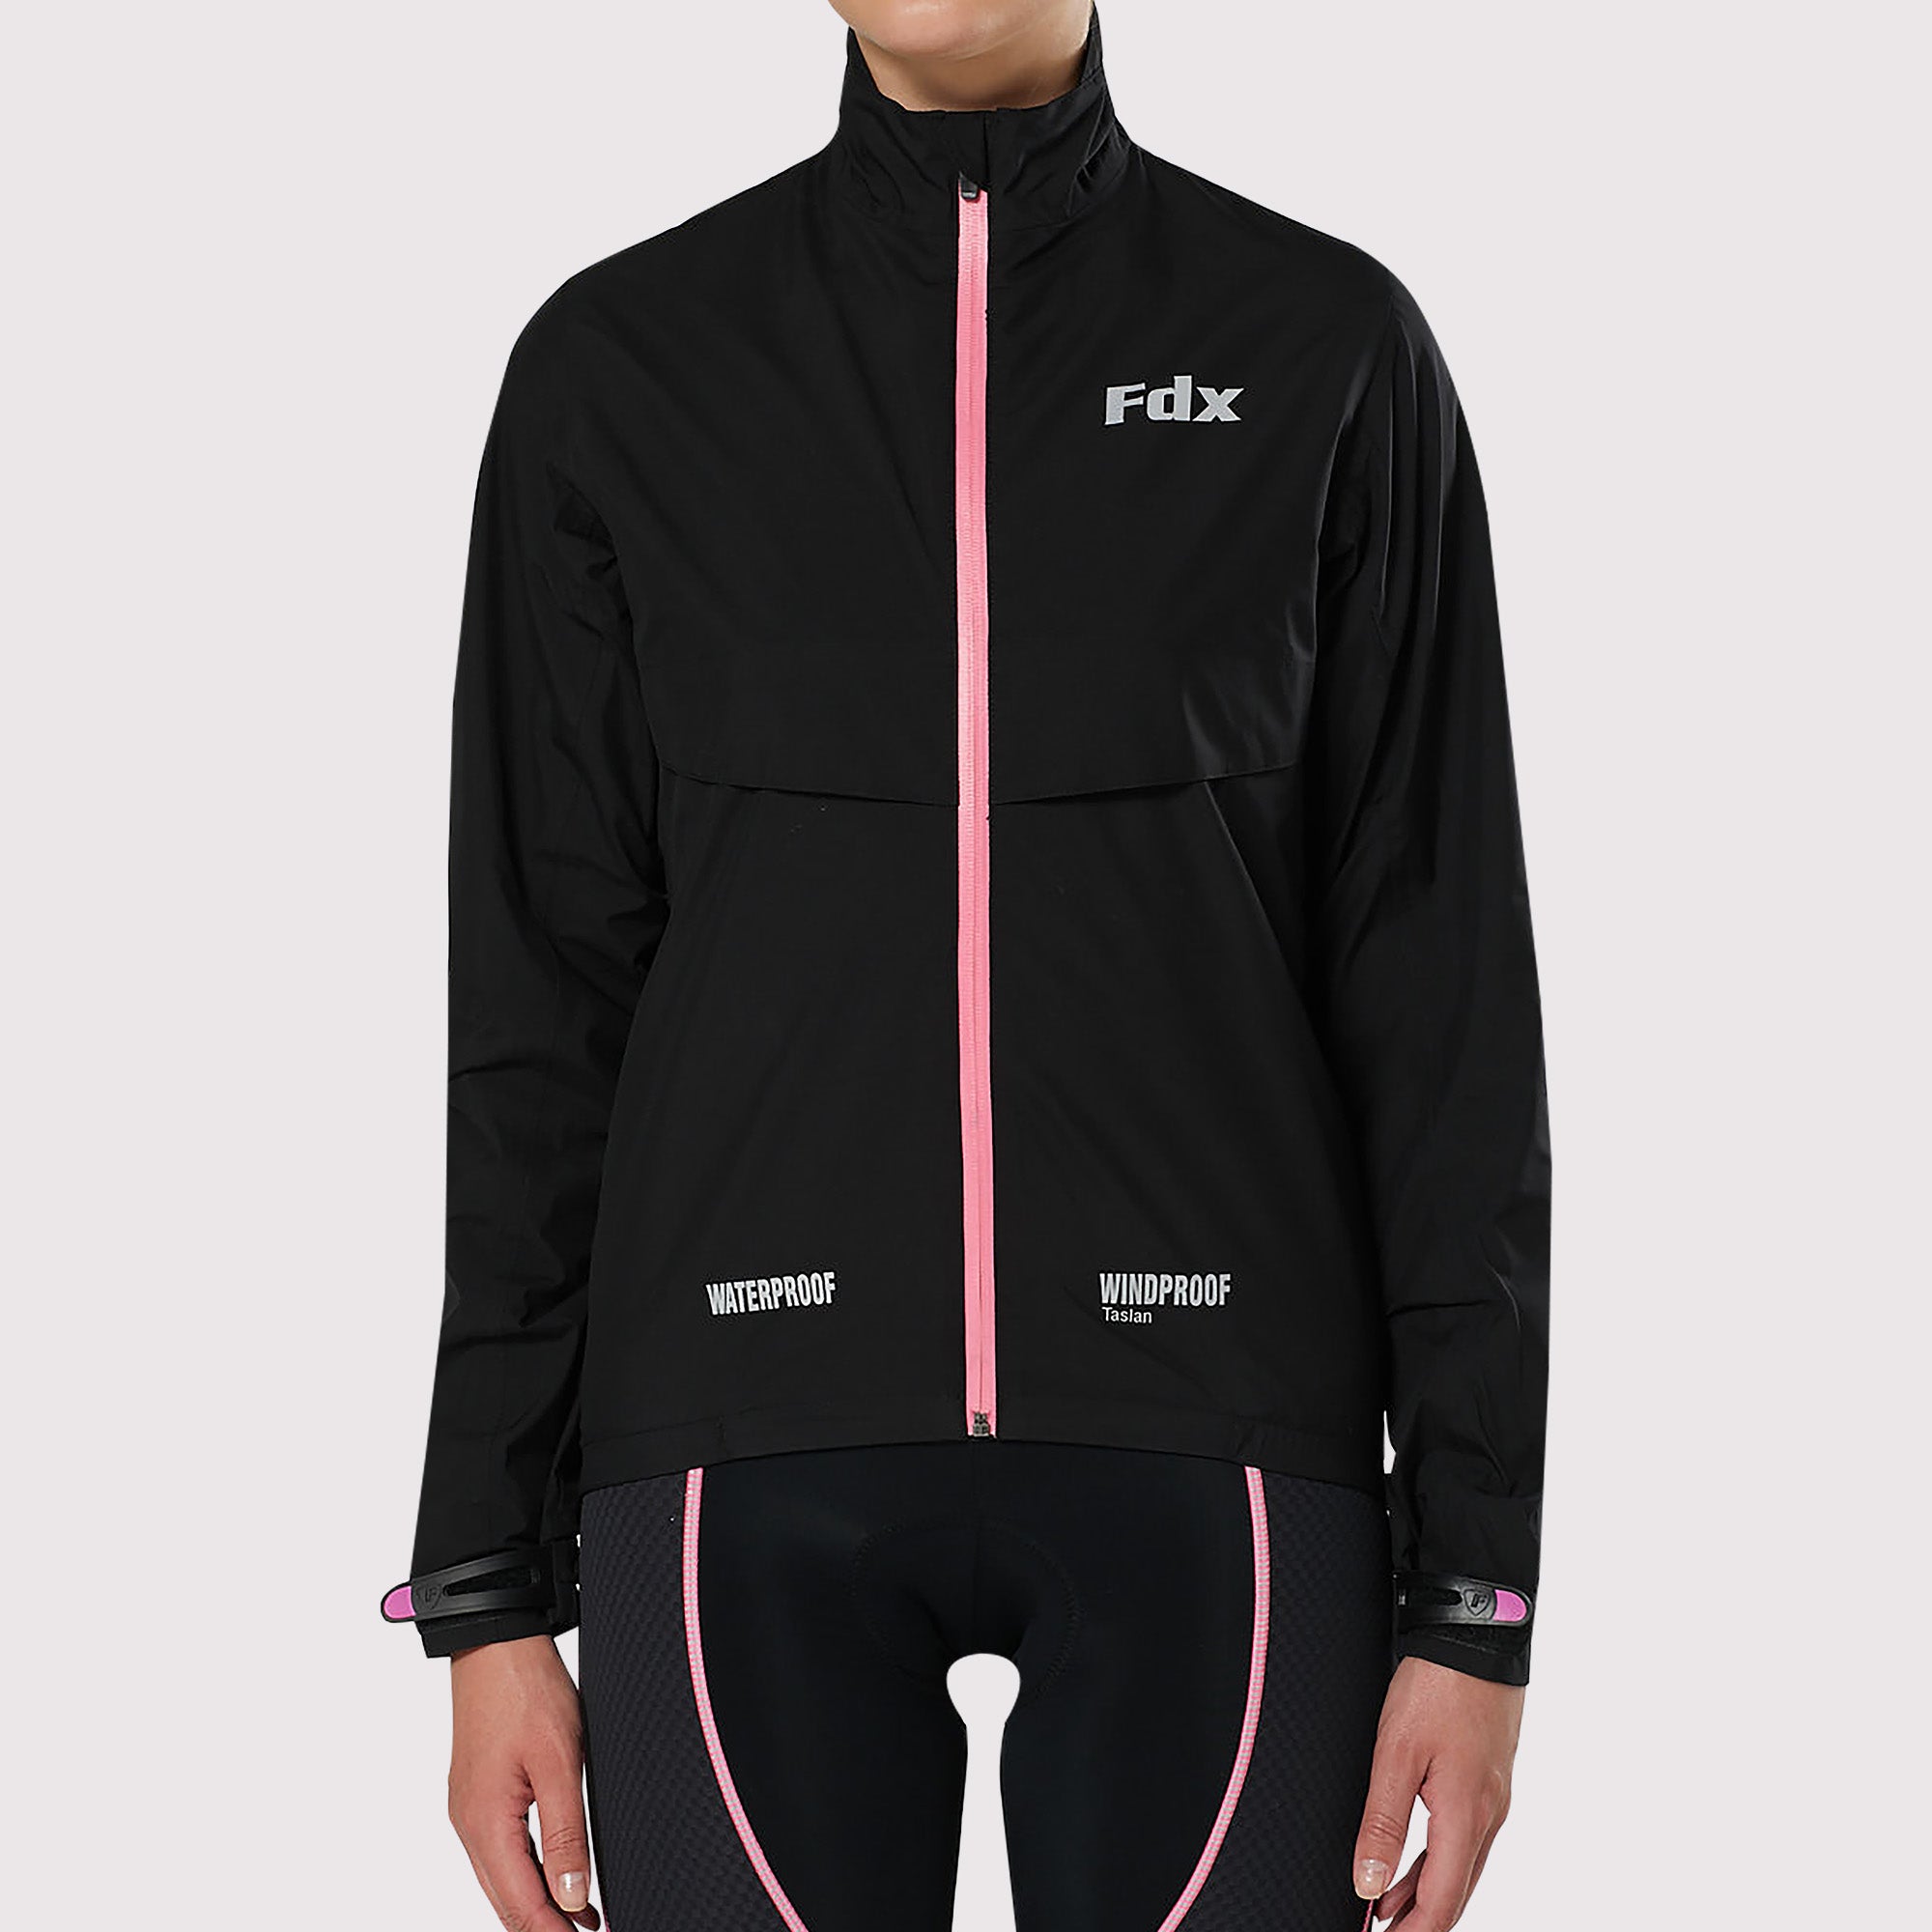 FDX Women Best Black & Pink Cycling Jacket Waterproof, Full Length Zip, hi viz reflective details velcro strips Windbreaker & Pocket - Evex